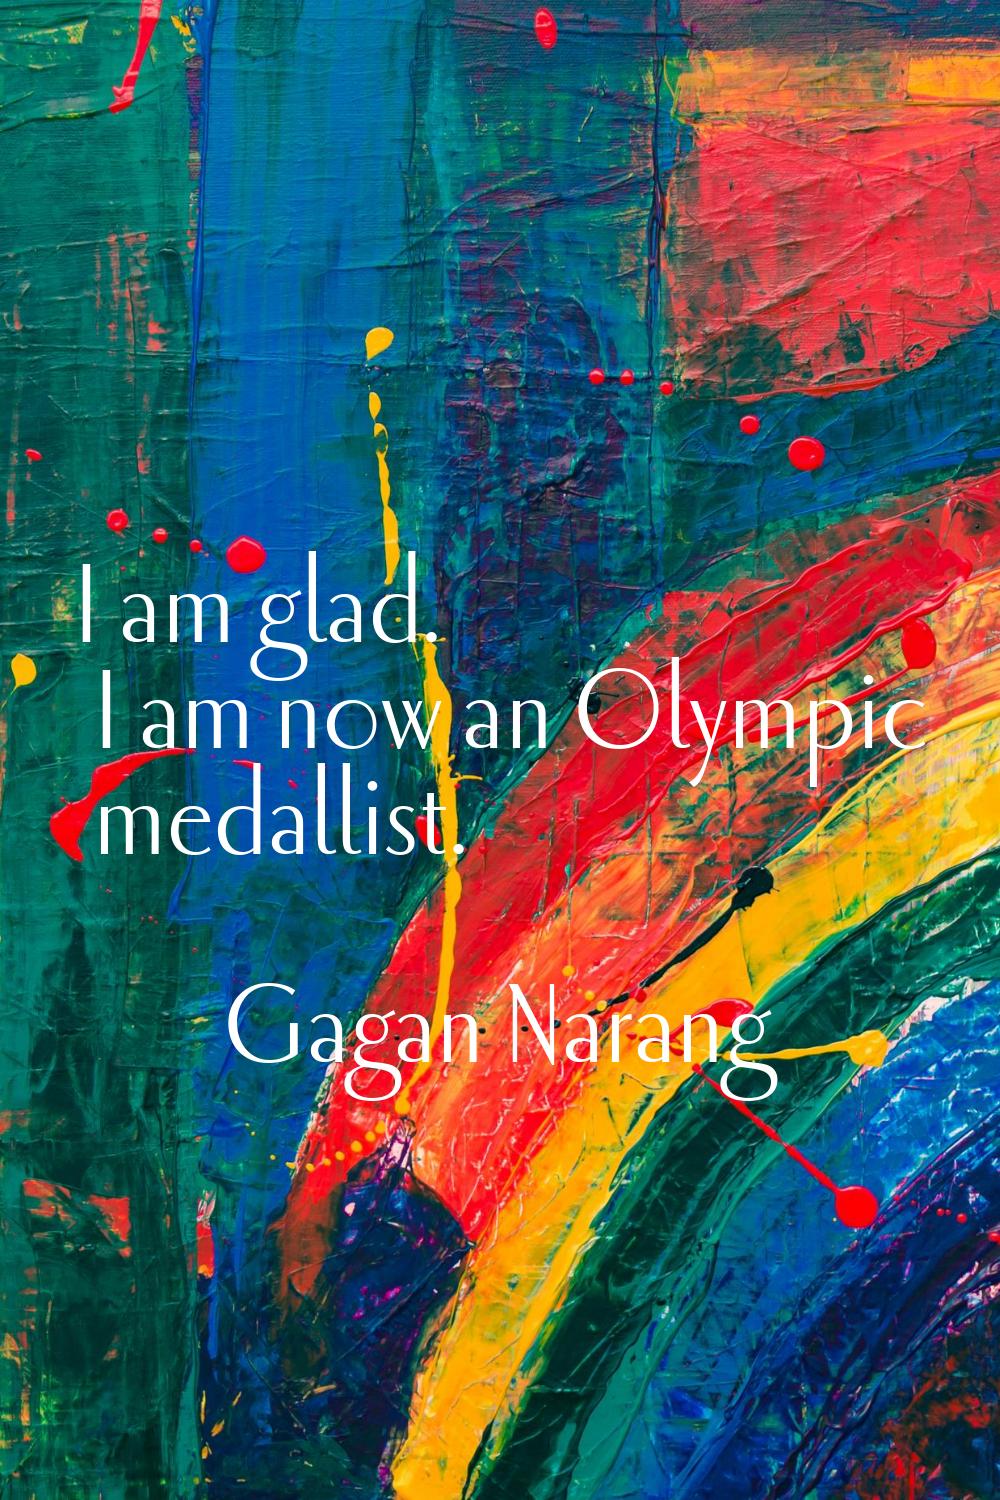 I am glad. I am now an Olympic medallist.